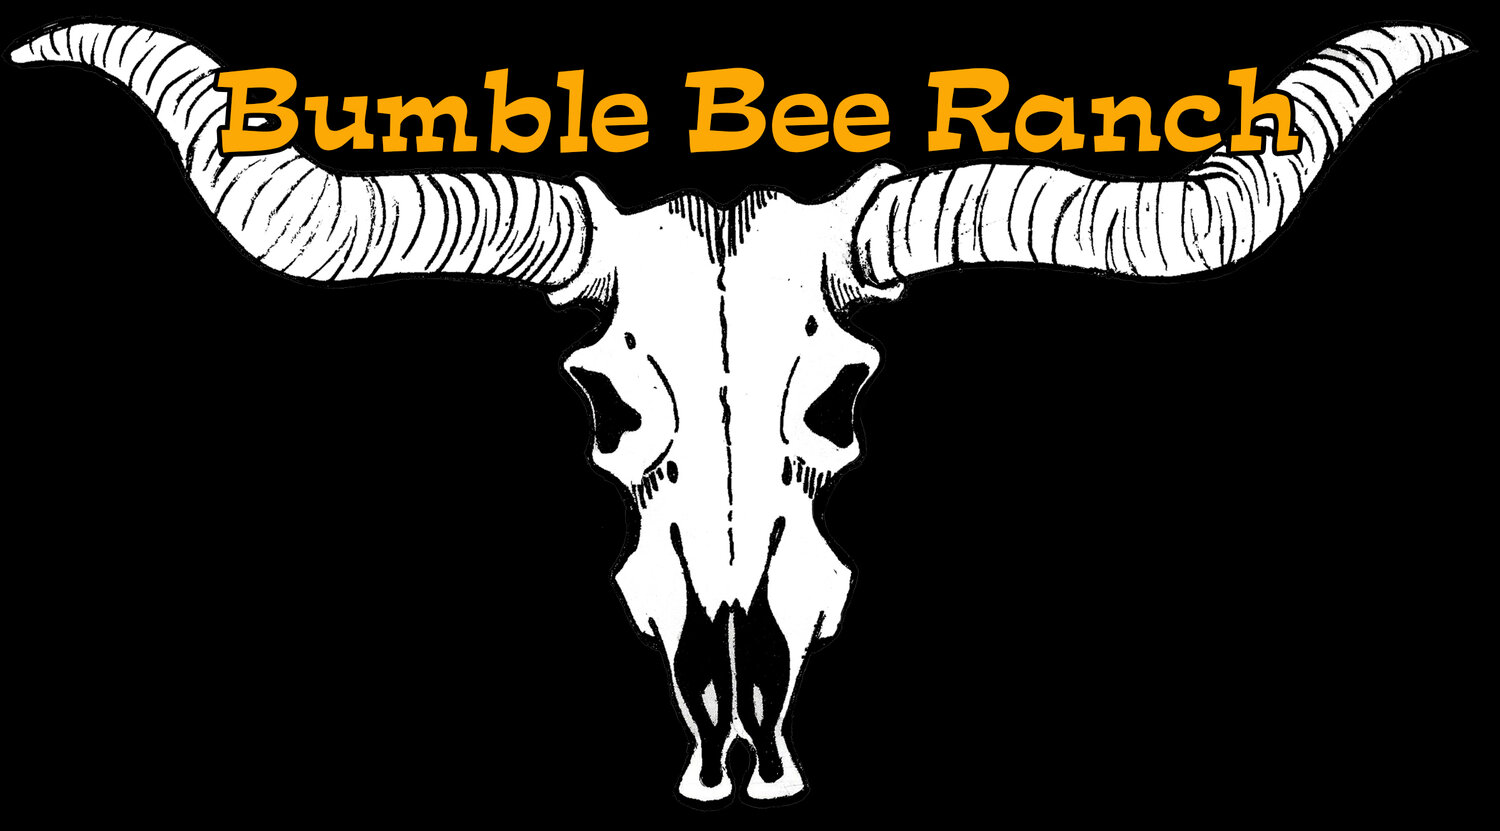 Bumble Bee Ranch Adventures